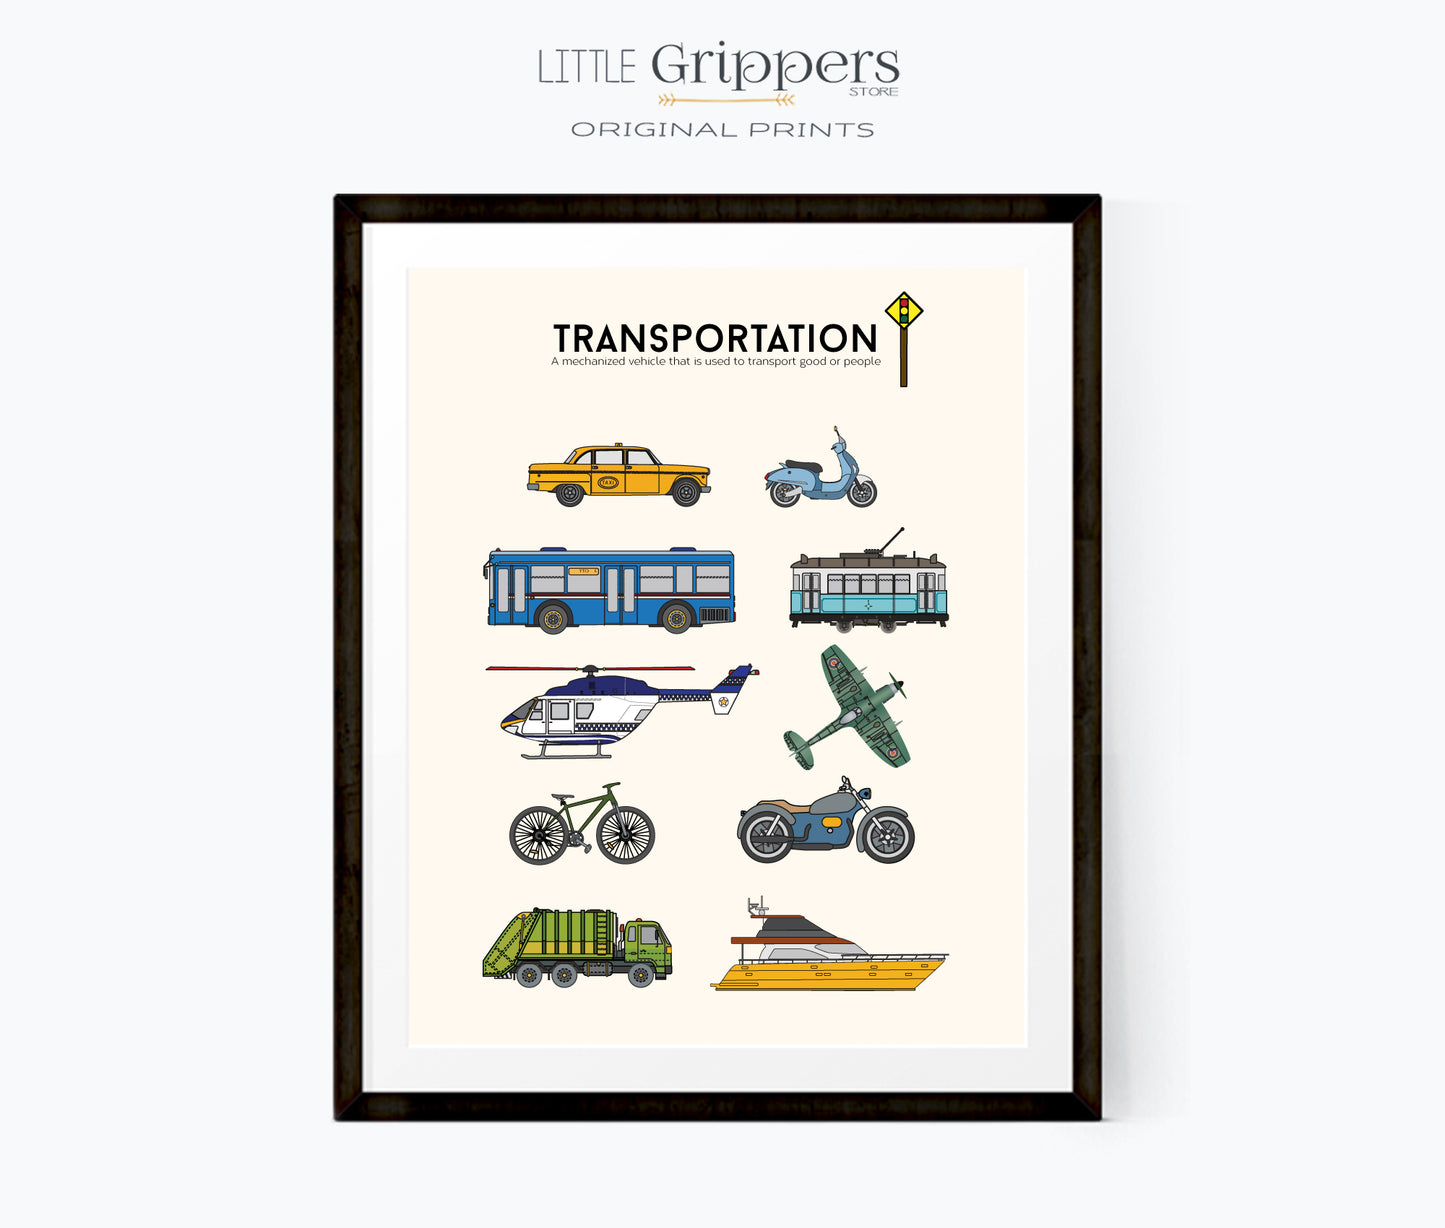 Transportation Vehicle Poster